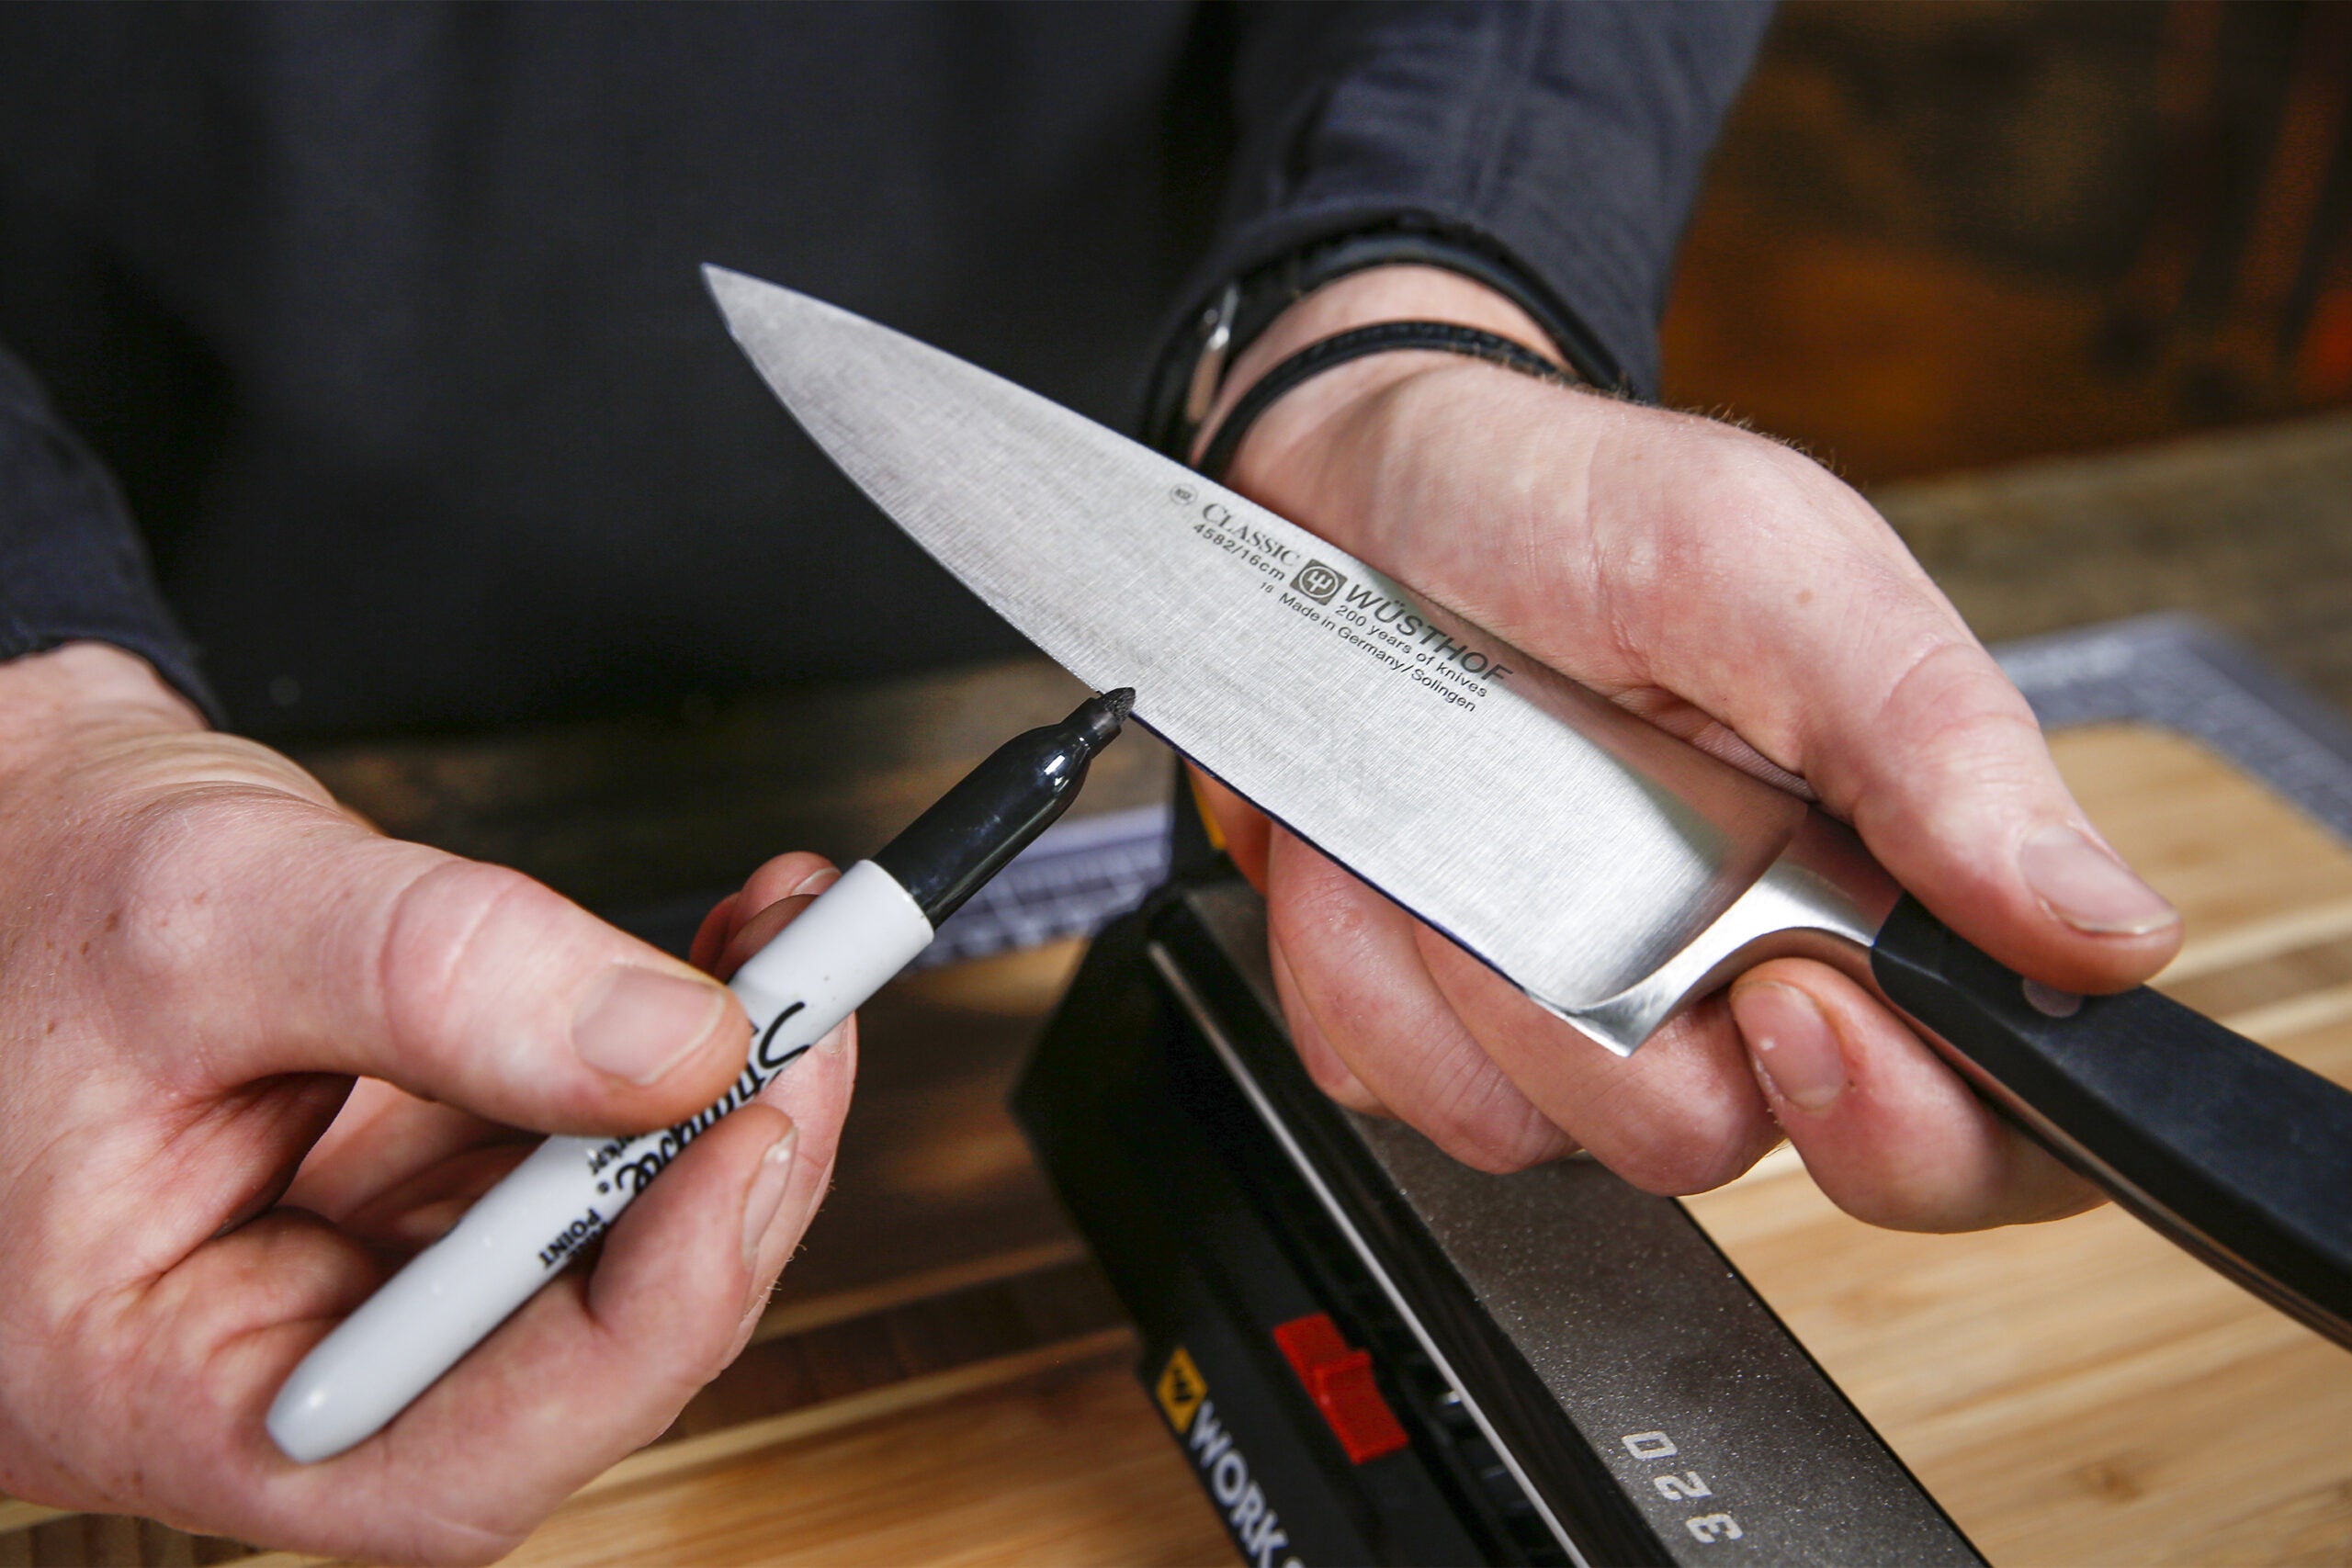 The Basics Of Knife Sharpening - Work Sharp Sharpeners